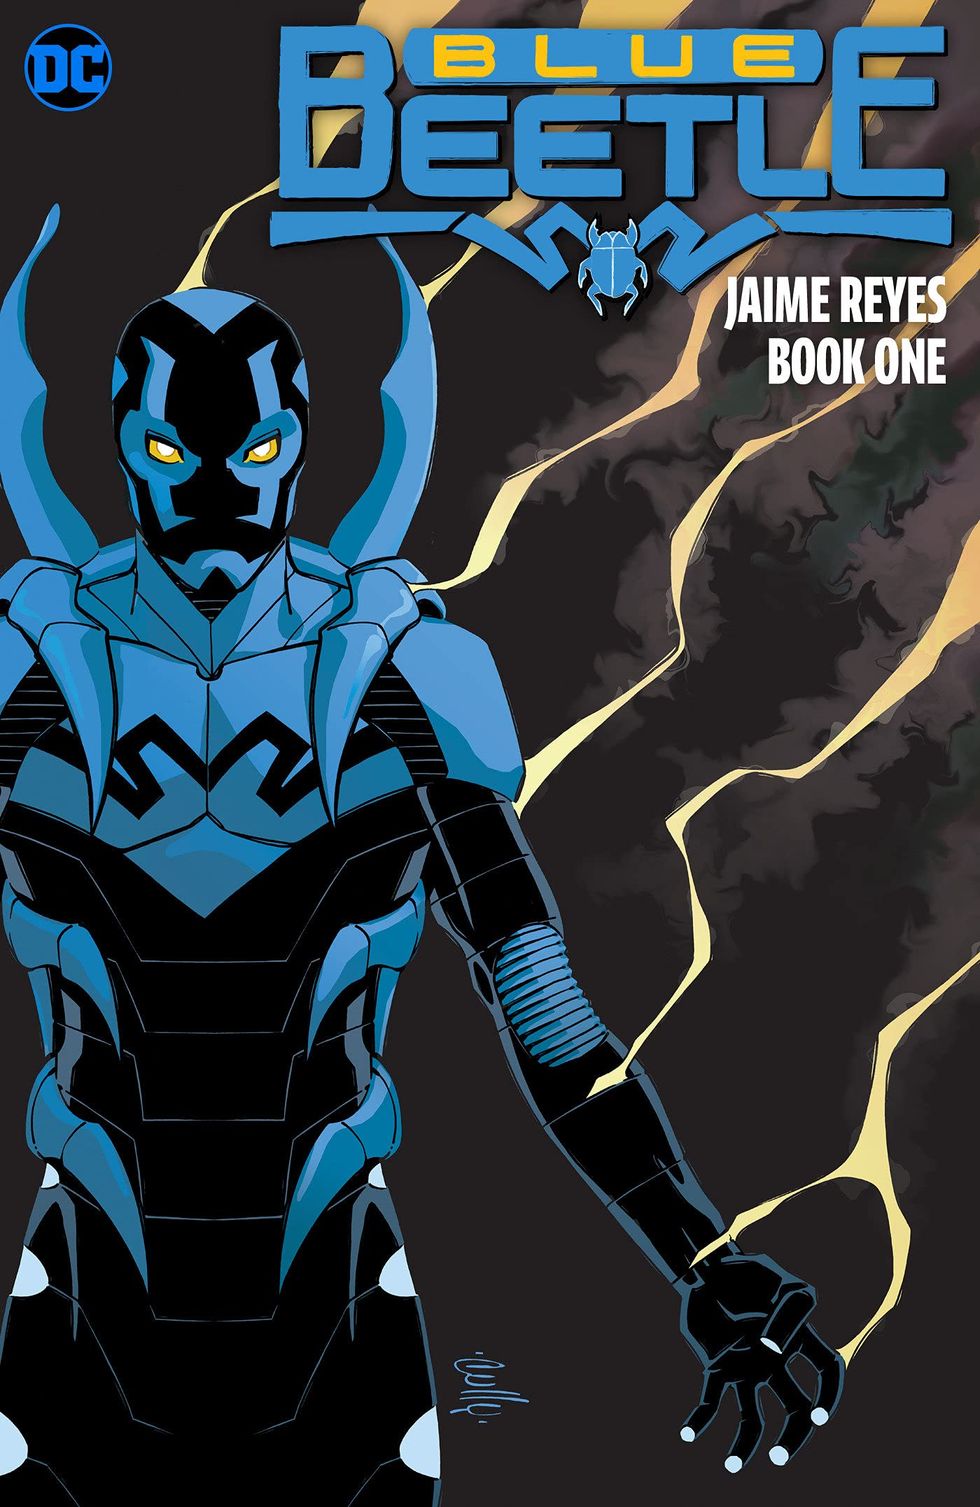 DC's Blue Beetle Movie Reportedly Eyes Cobra Kai Star Xolo Maridueña